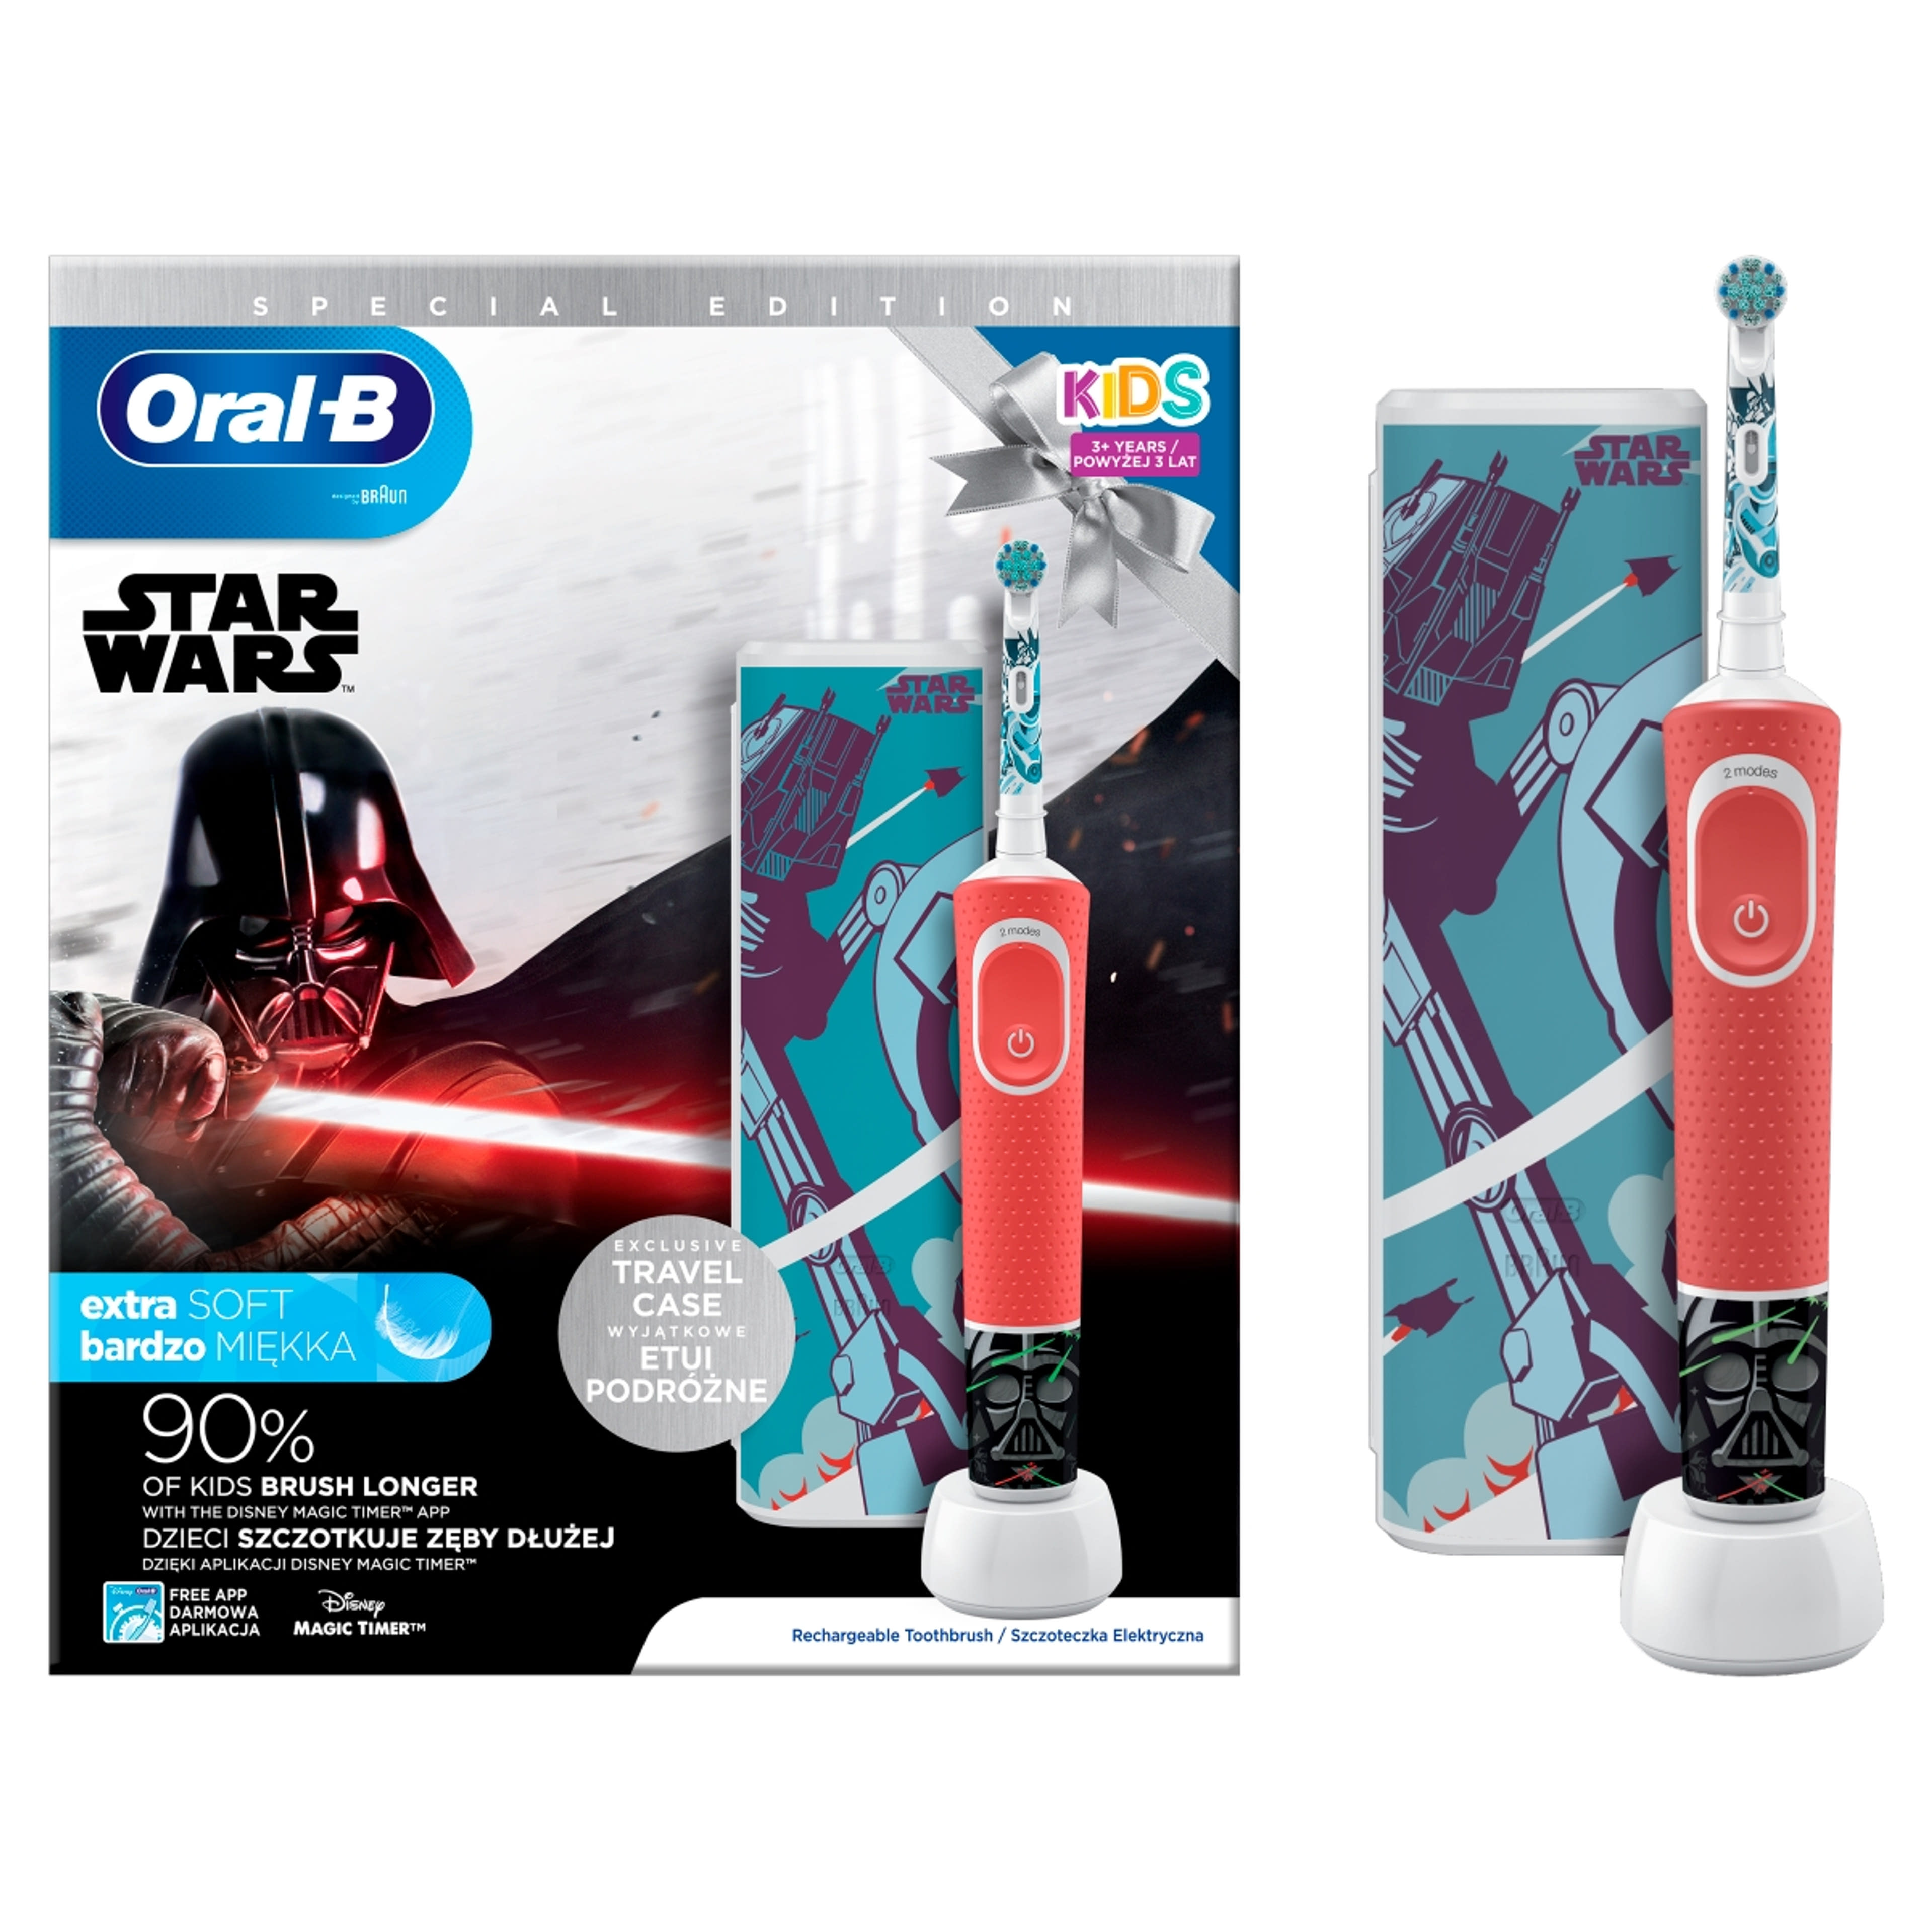 Oral-B Kisd Star Wars elektromos fogkefe utazótokkal -1 db-2